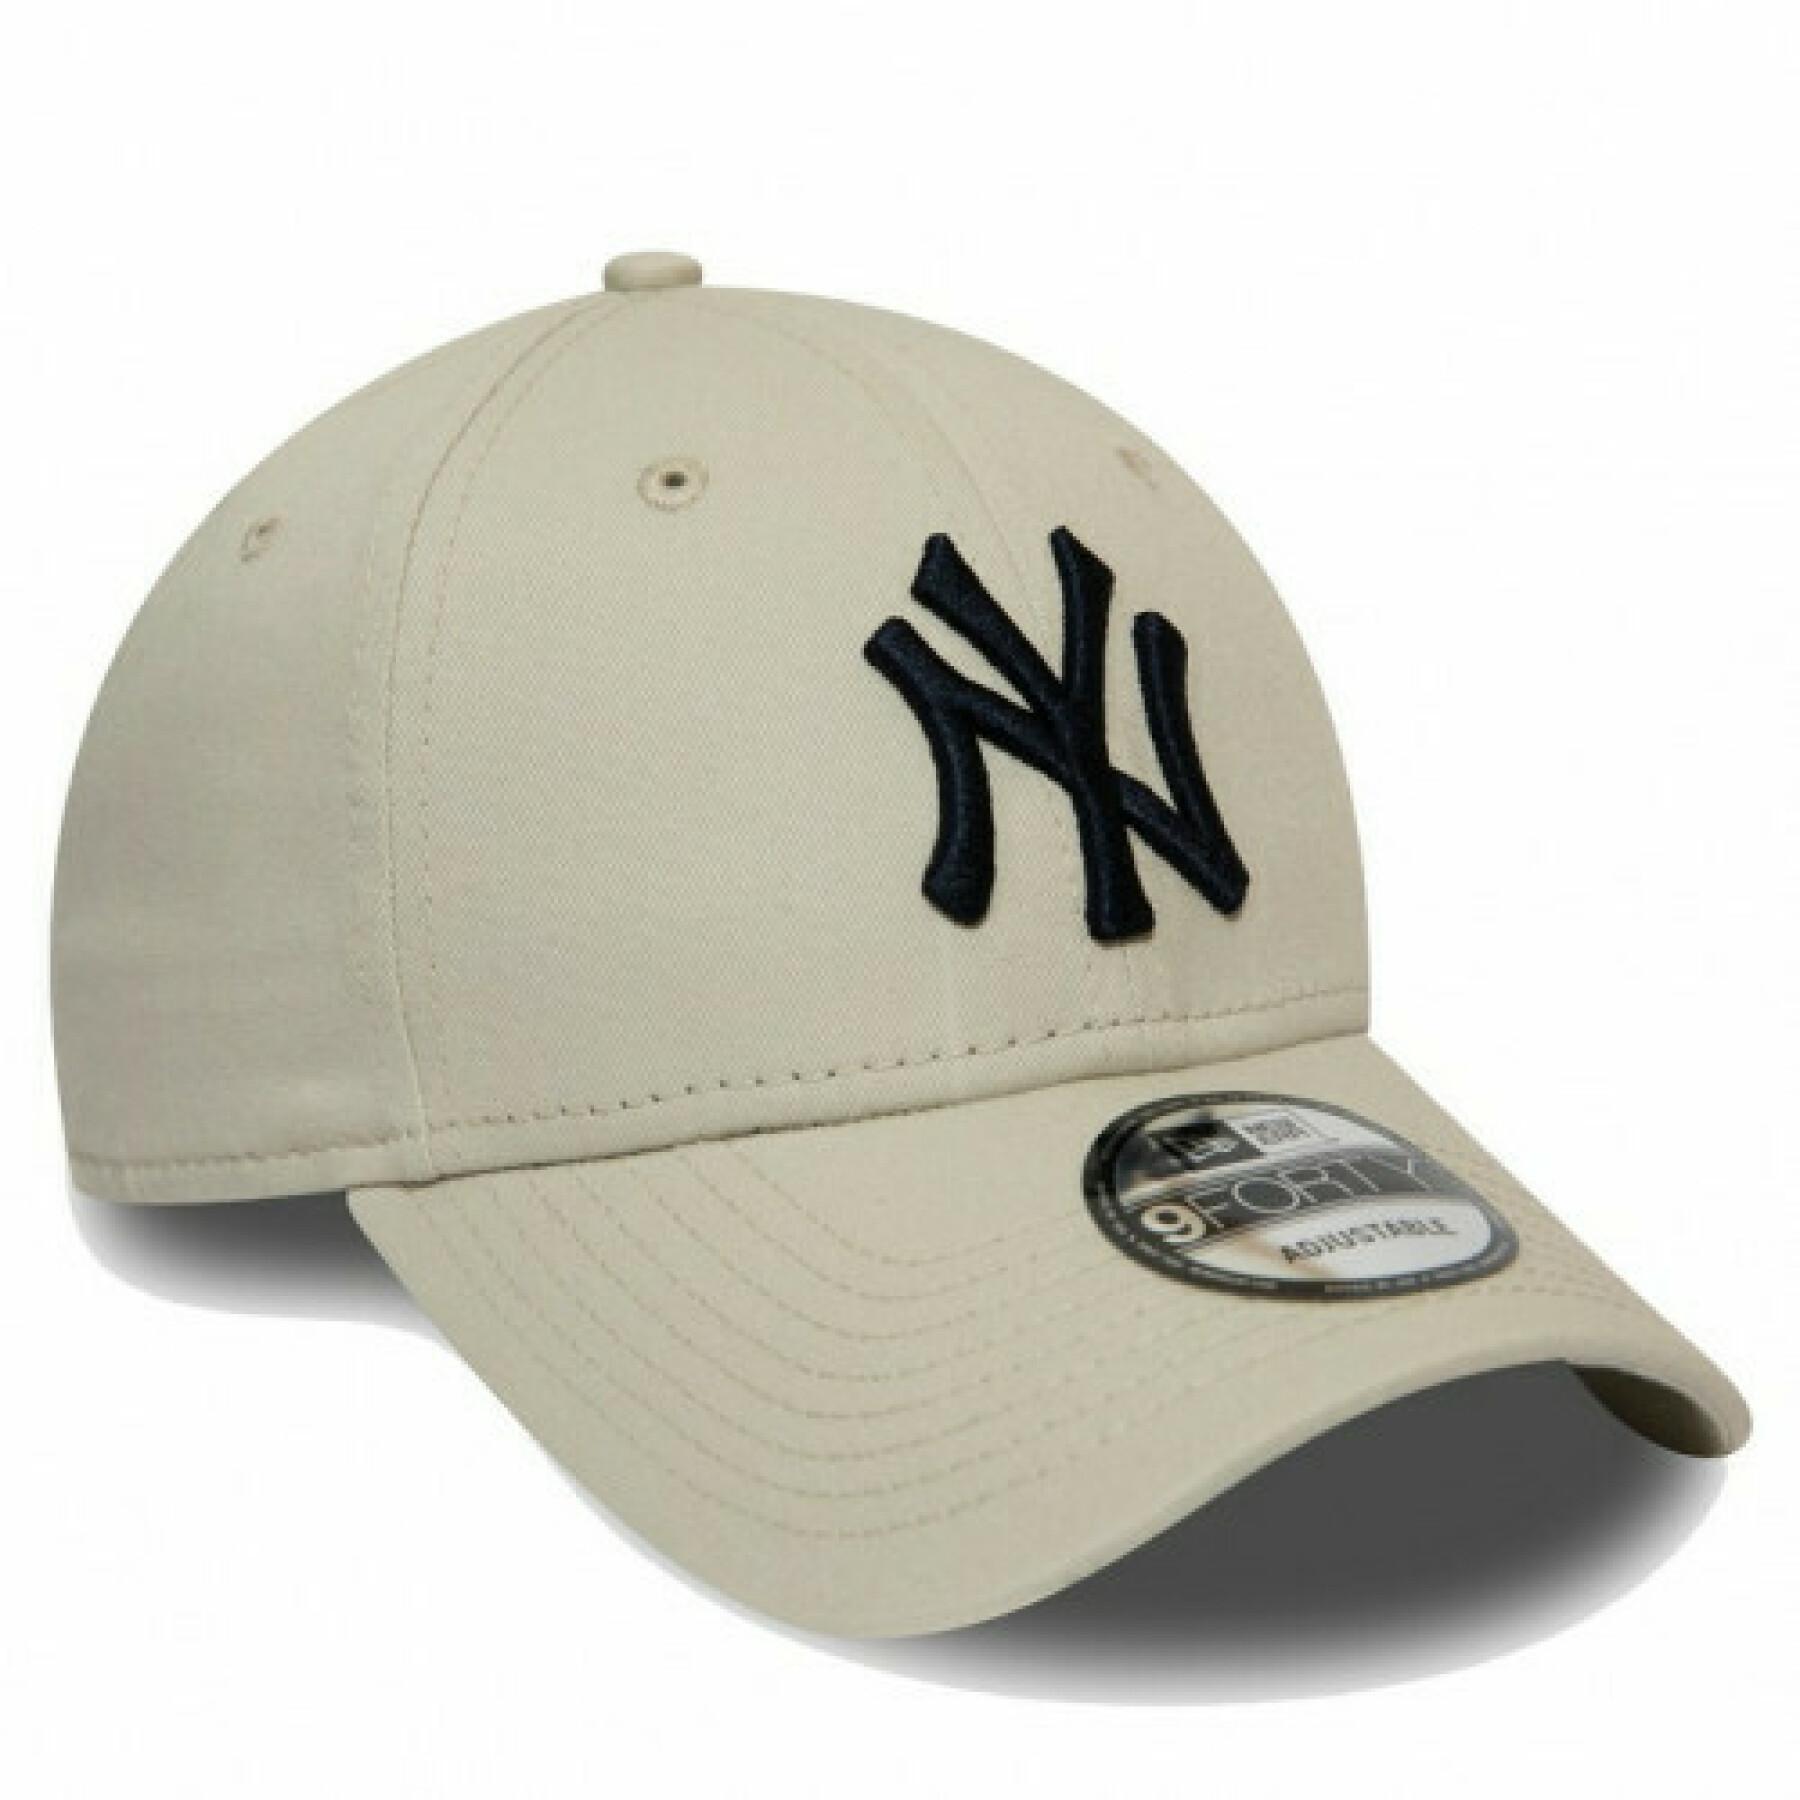 Kappe New Era League Essential 940 New York Yankees